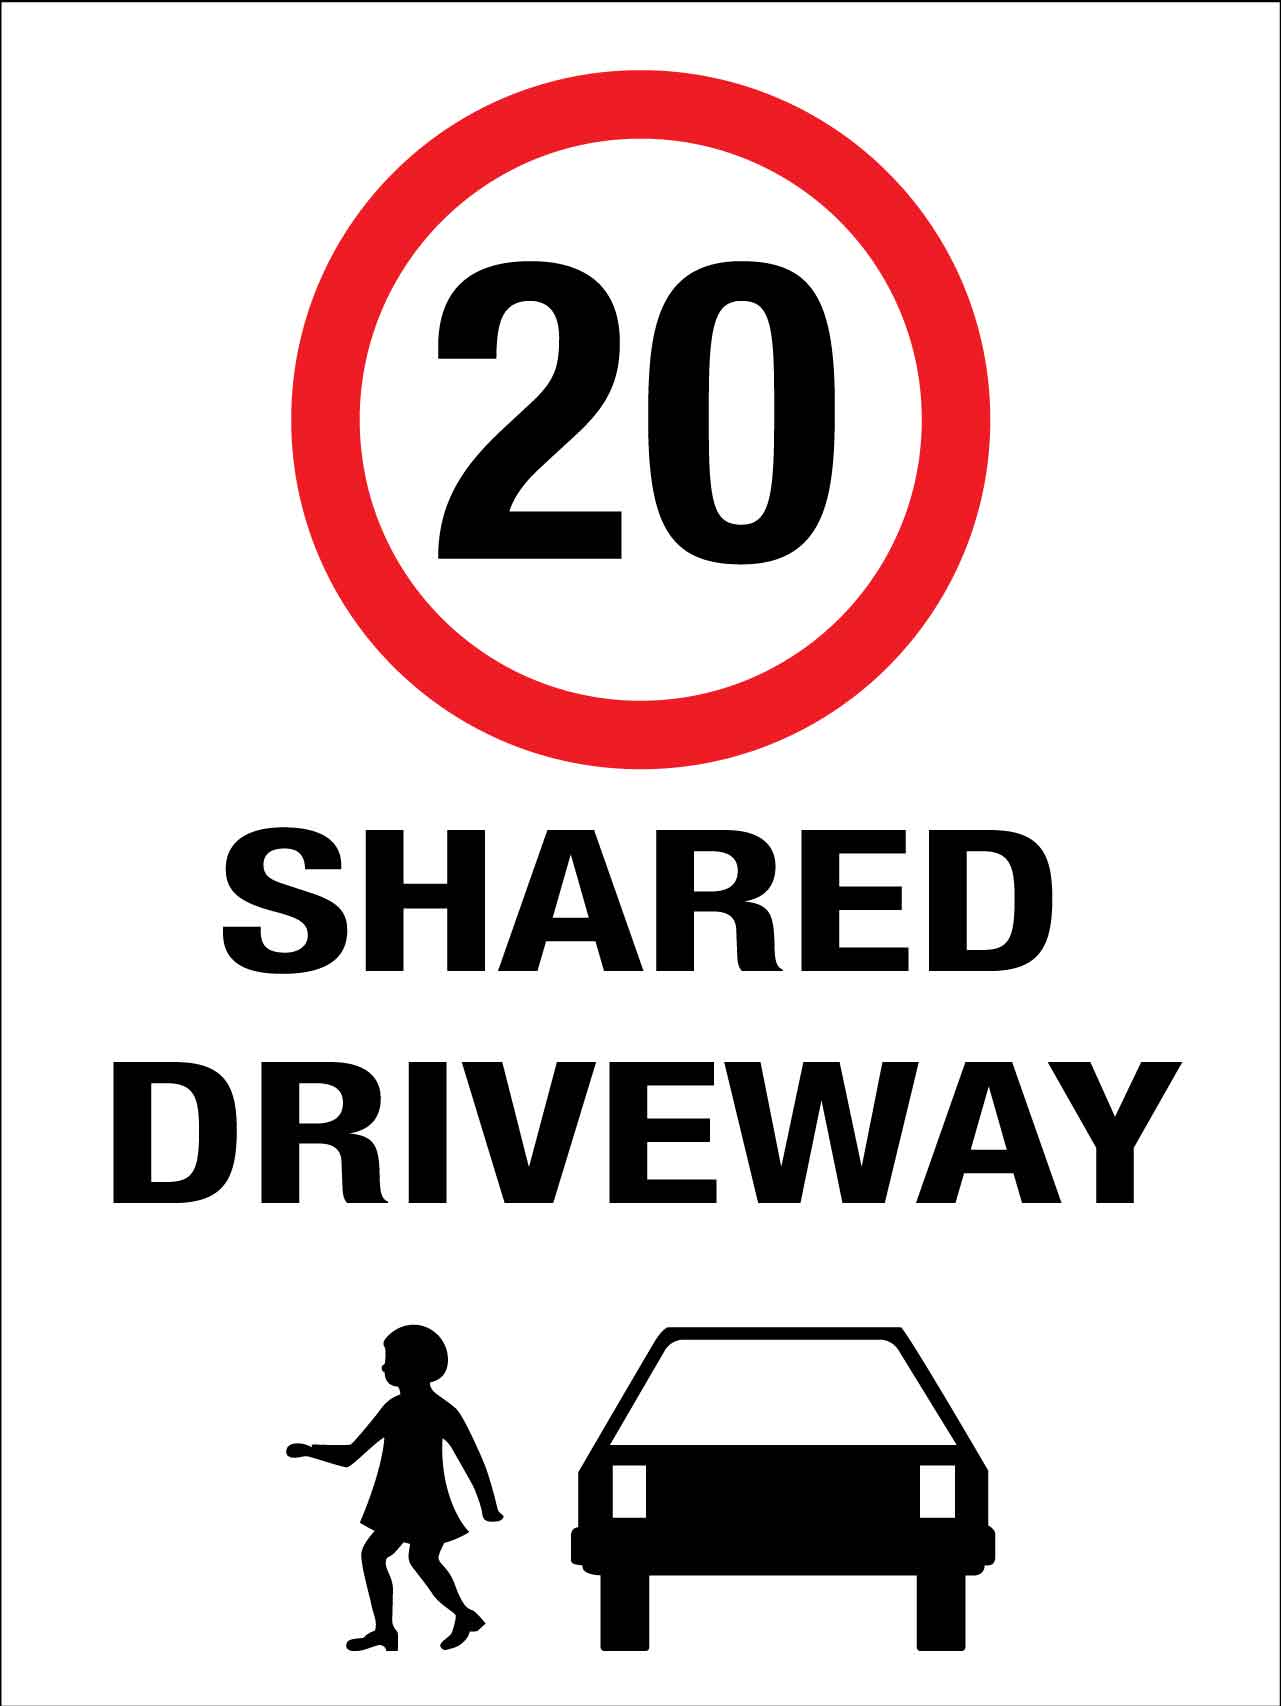 Shared Driveway 20km Speed Limit Sign